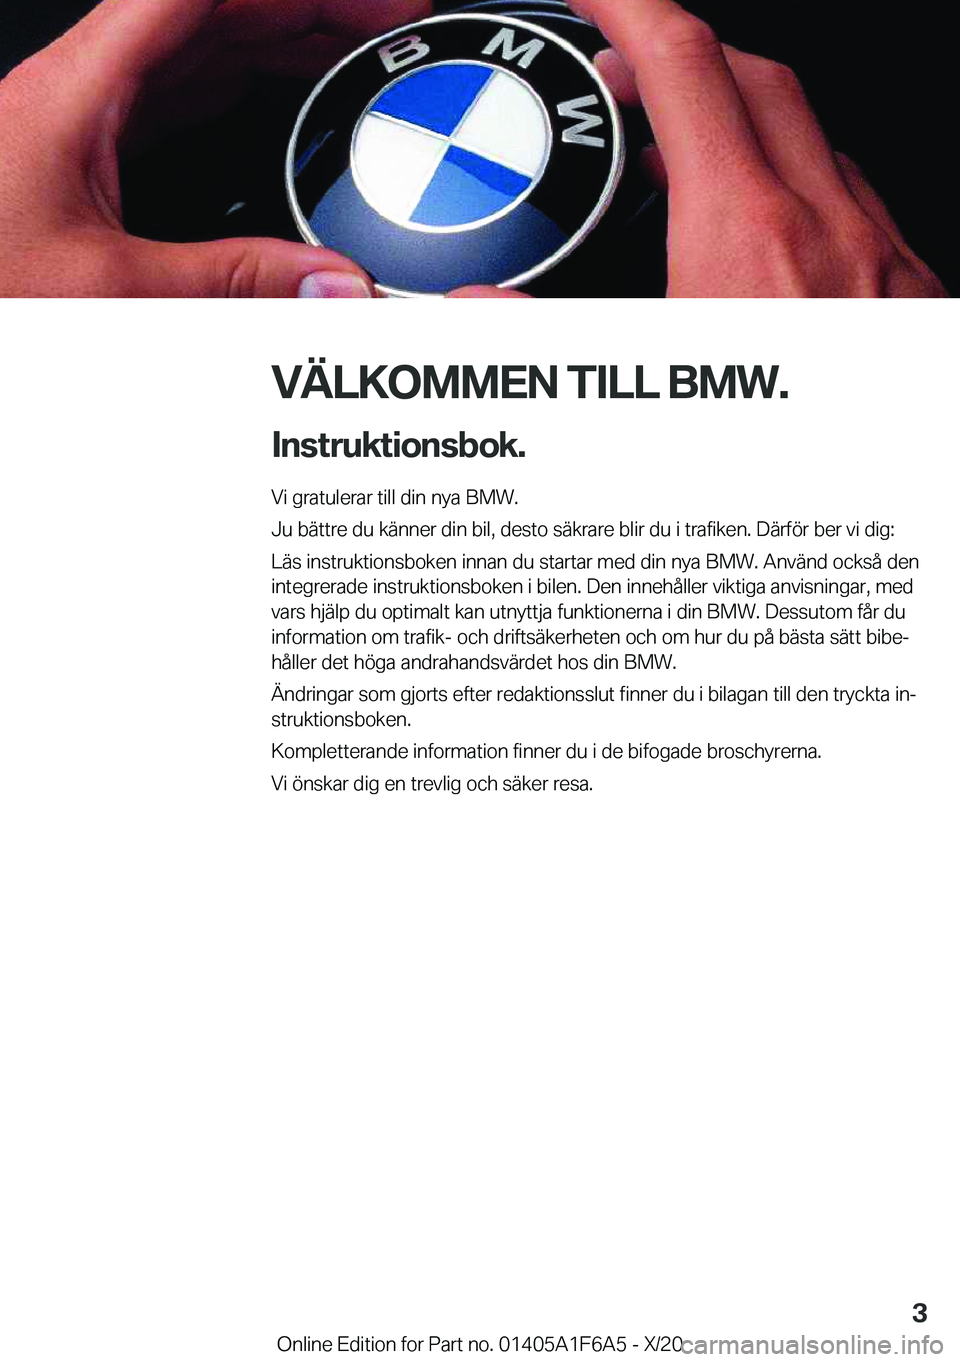 BMW X4 2021  InstruktionsbÖcker (in Swedish) �V�Ä�L�K�O�M�M�E�N��T�I�L�L��B�M�W�.�I�n�s�t�r�u�k�t�i�o�n�s�b�o�k�.
�V�i��g�r�a�t�u�l�e�r�a�r��t�i�l�l��d�i�n��n�y�a��B�M�W�.
�J�u��b�ä�t�t�r�e��d�u��k�ä�n�n�e�r��d�i�n��b�i�l�,��d�e�